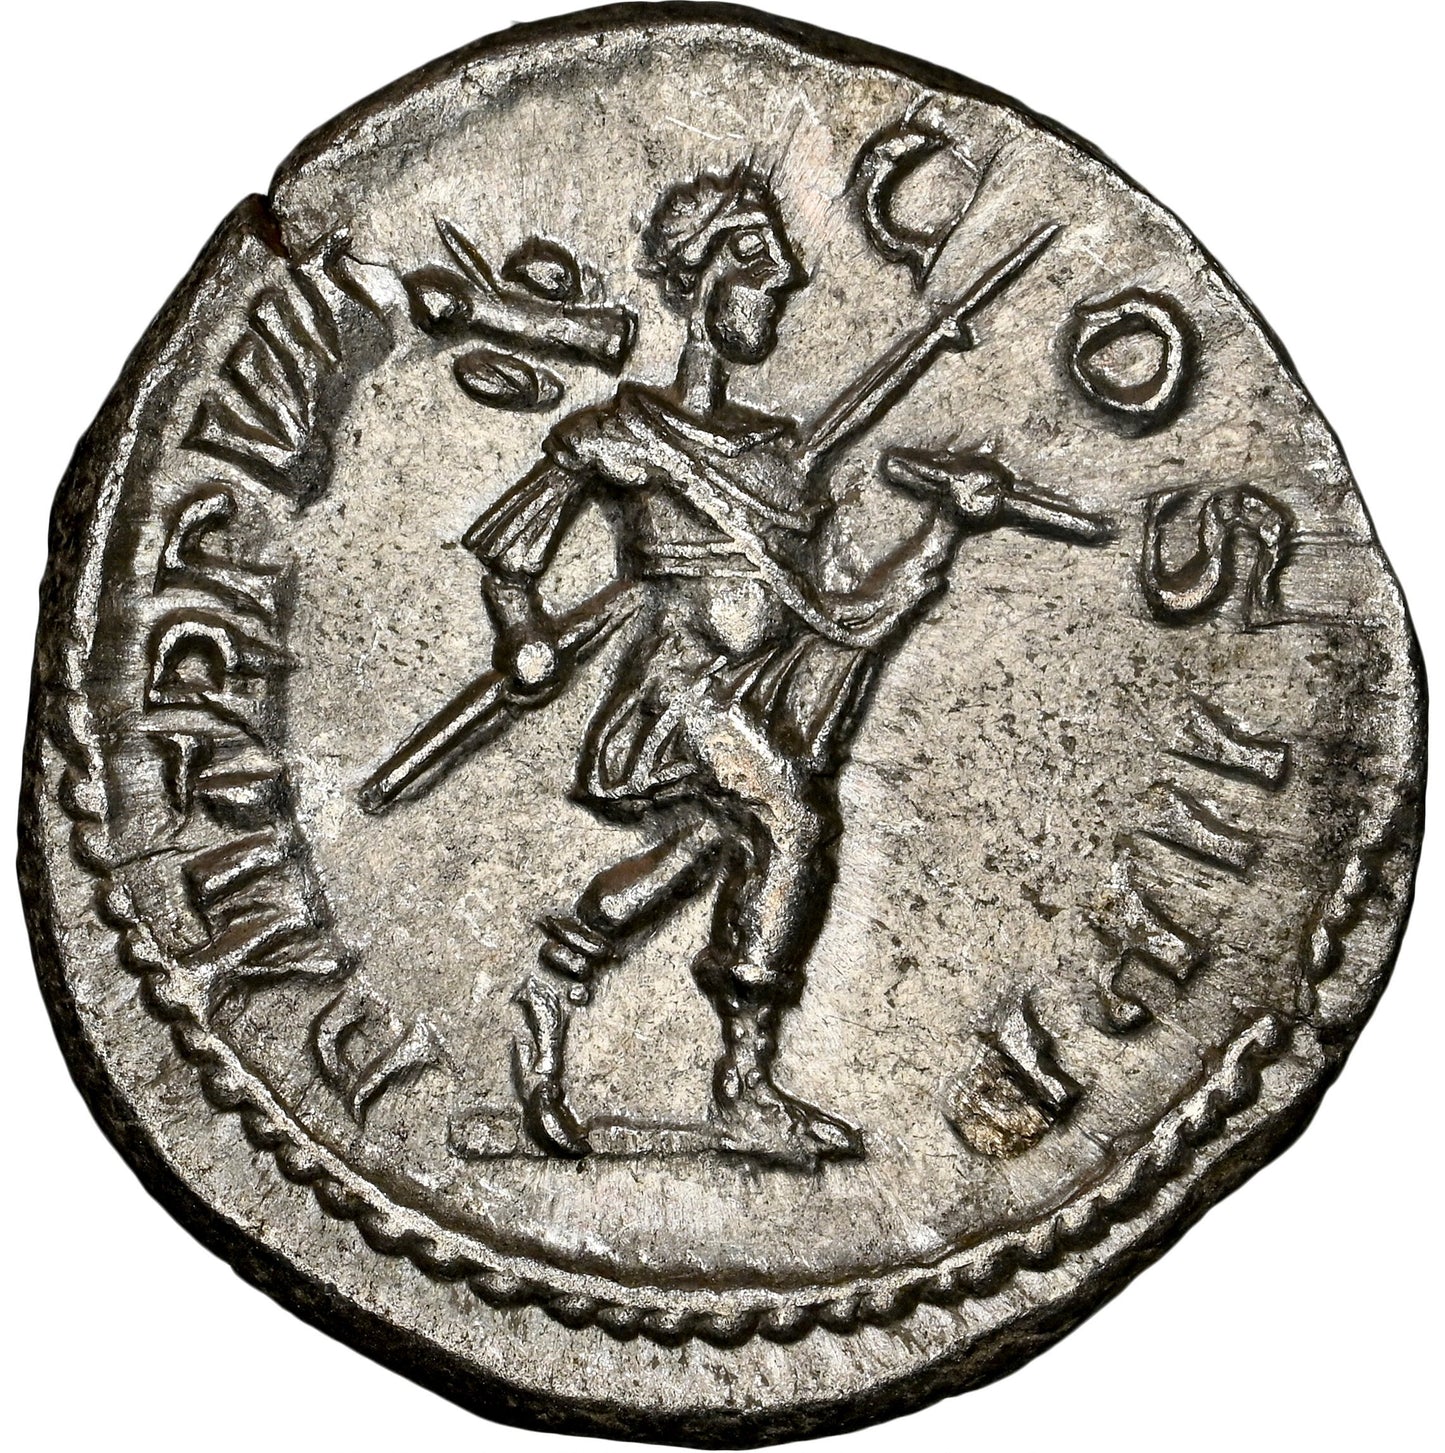 Roman Empire - Severus Alexander - Silver Denarius - NGC AU - RIC:85